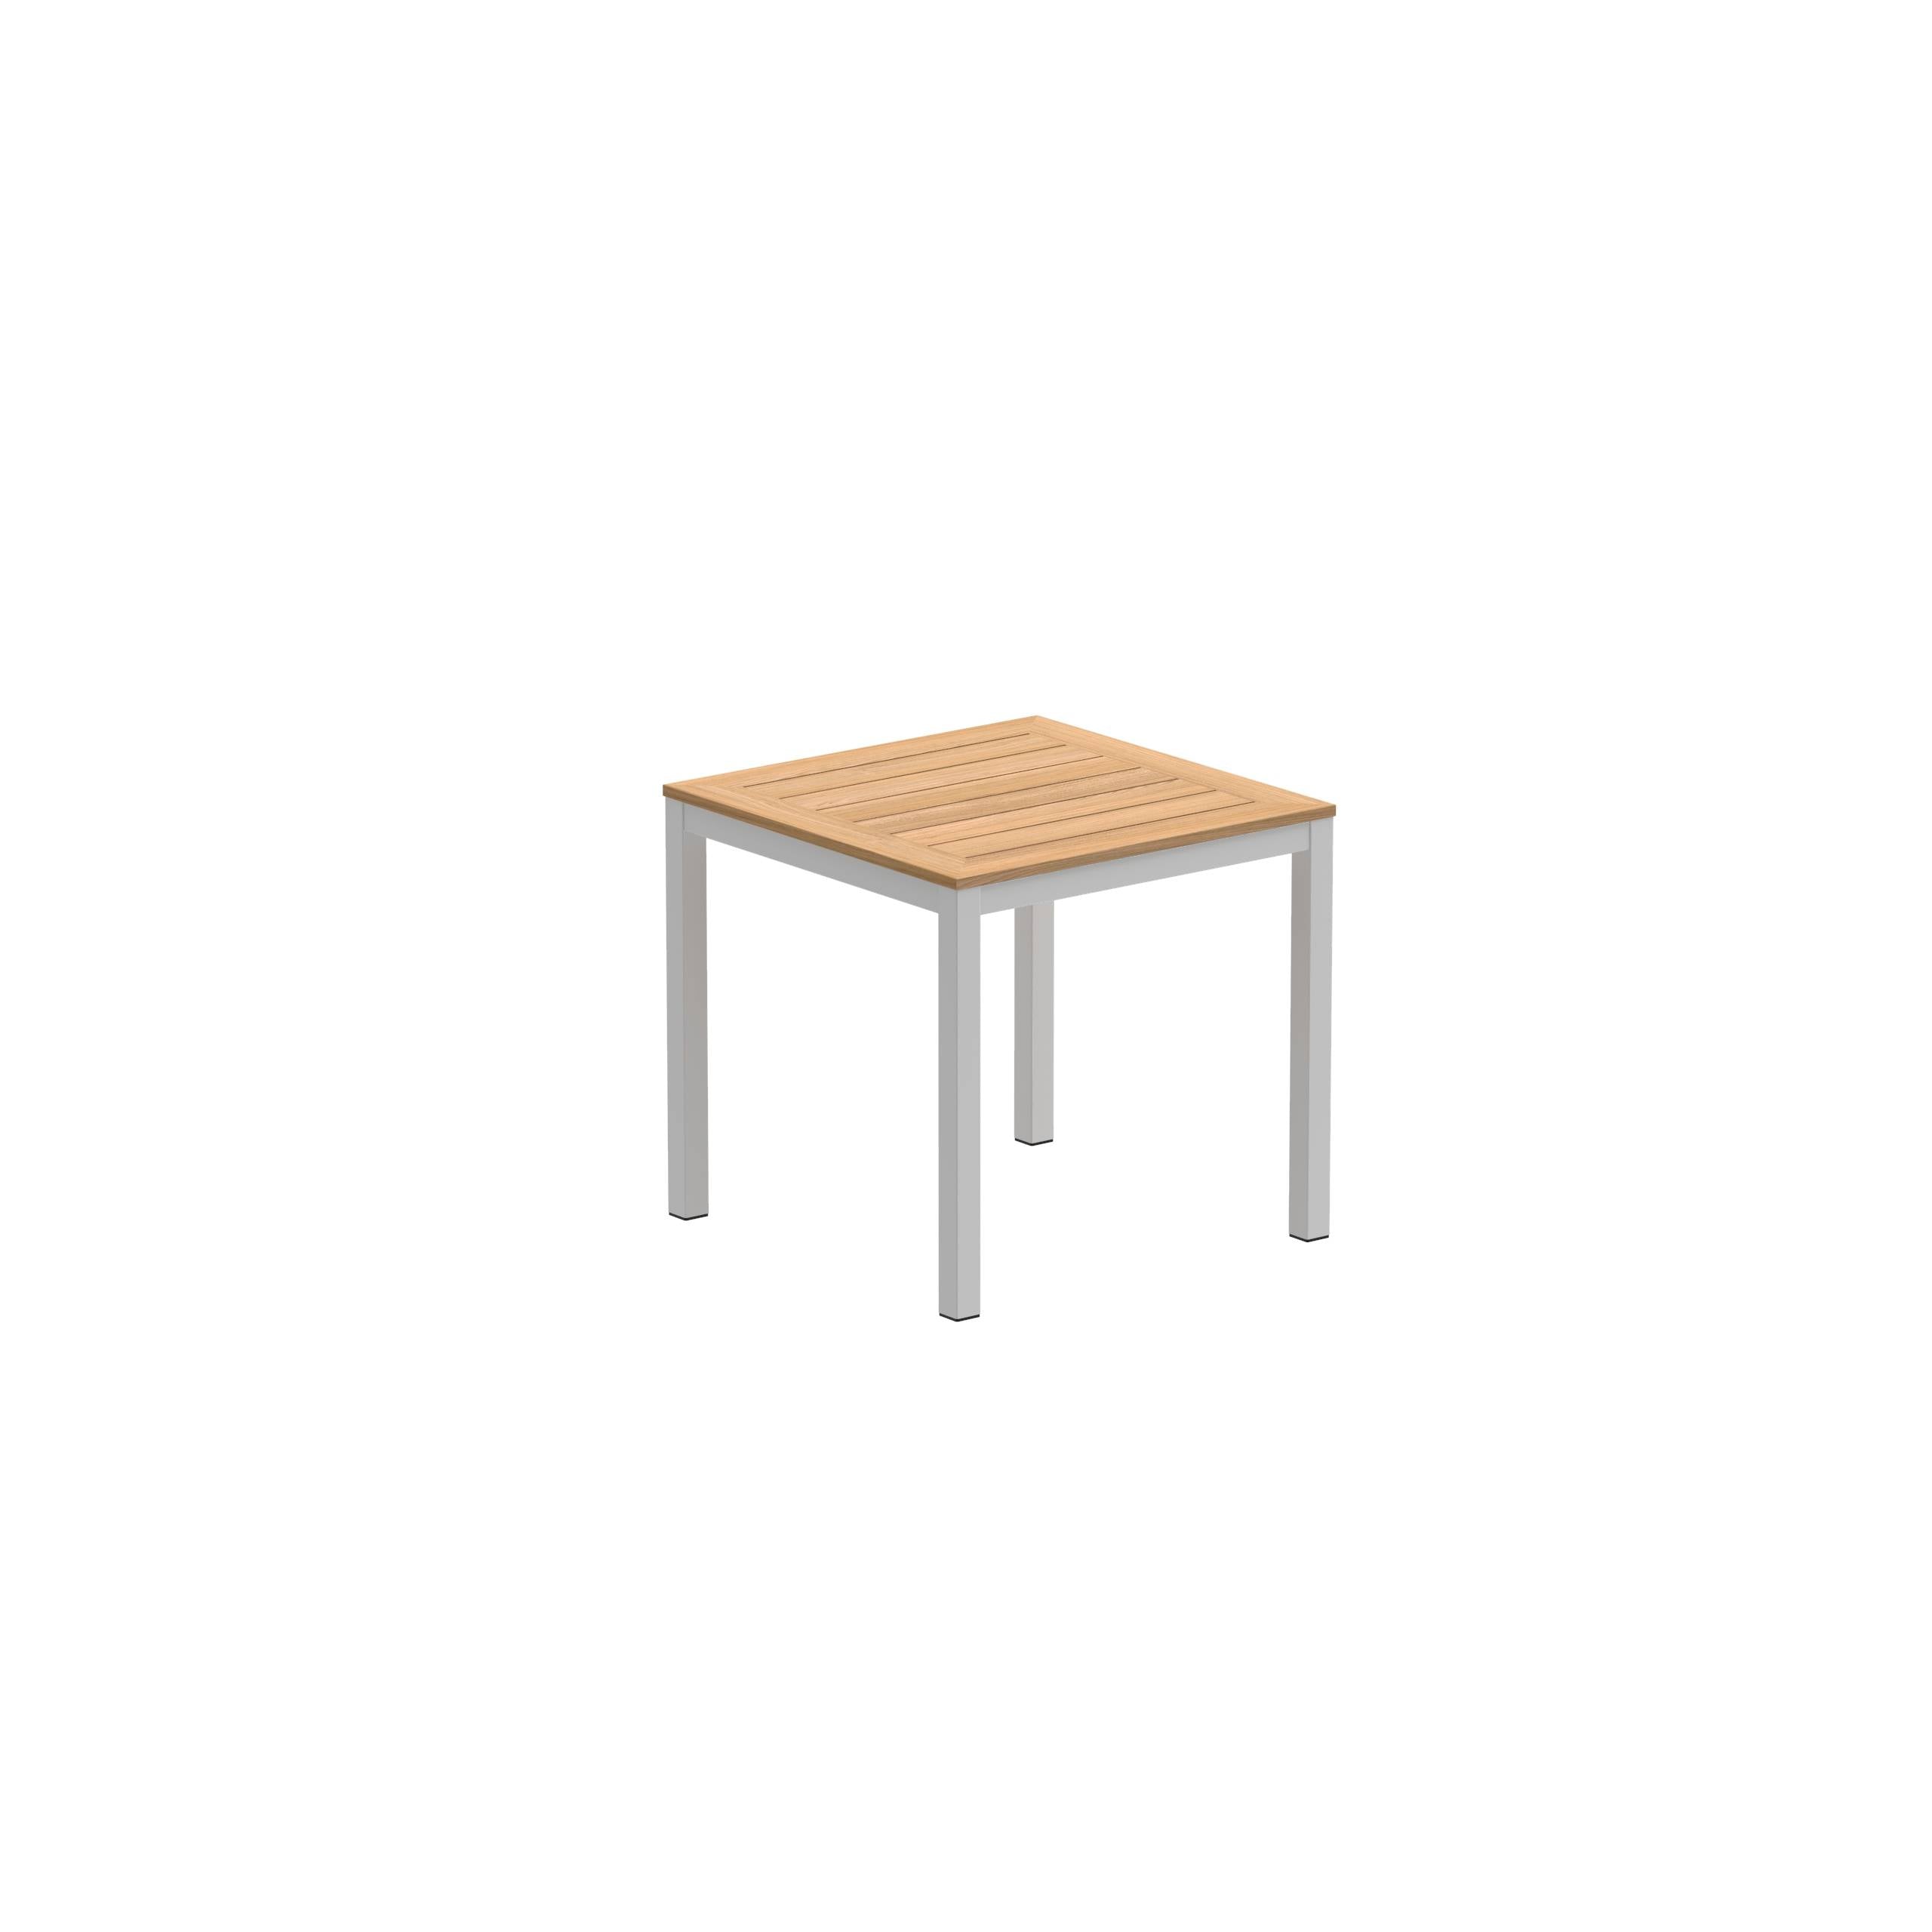 Taboela Table 80x80cm White With Teak Tabletop